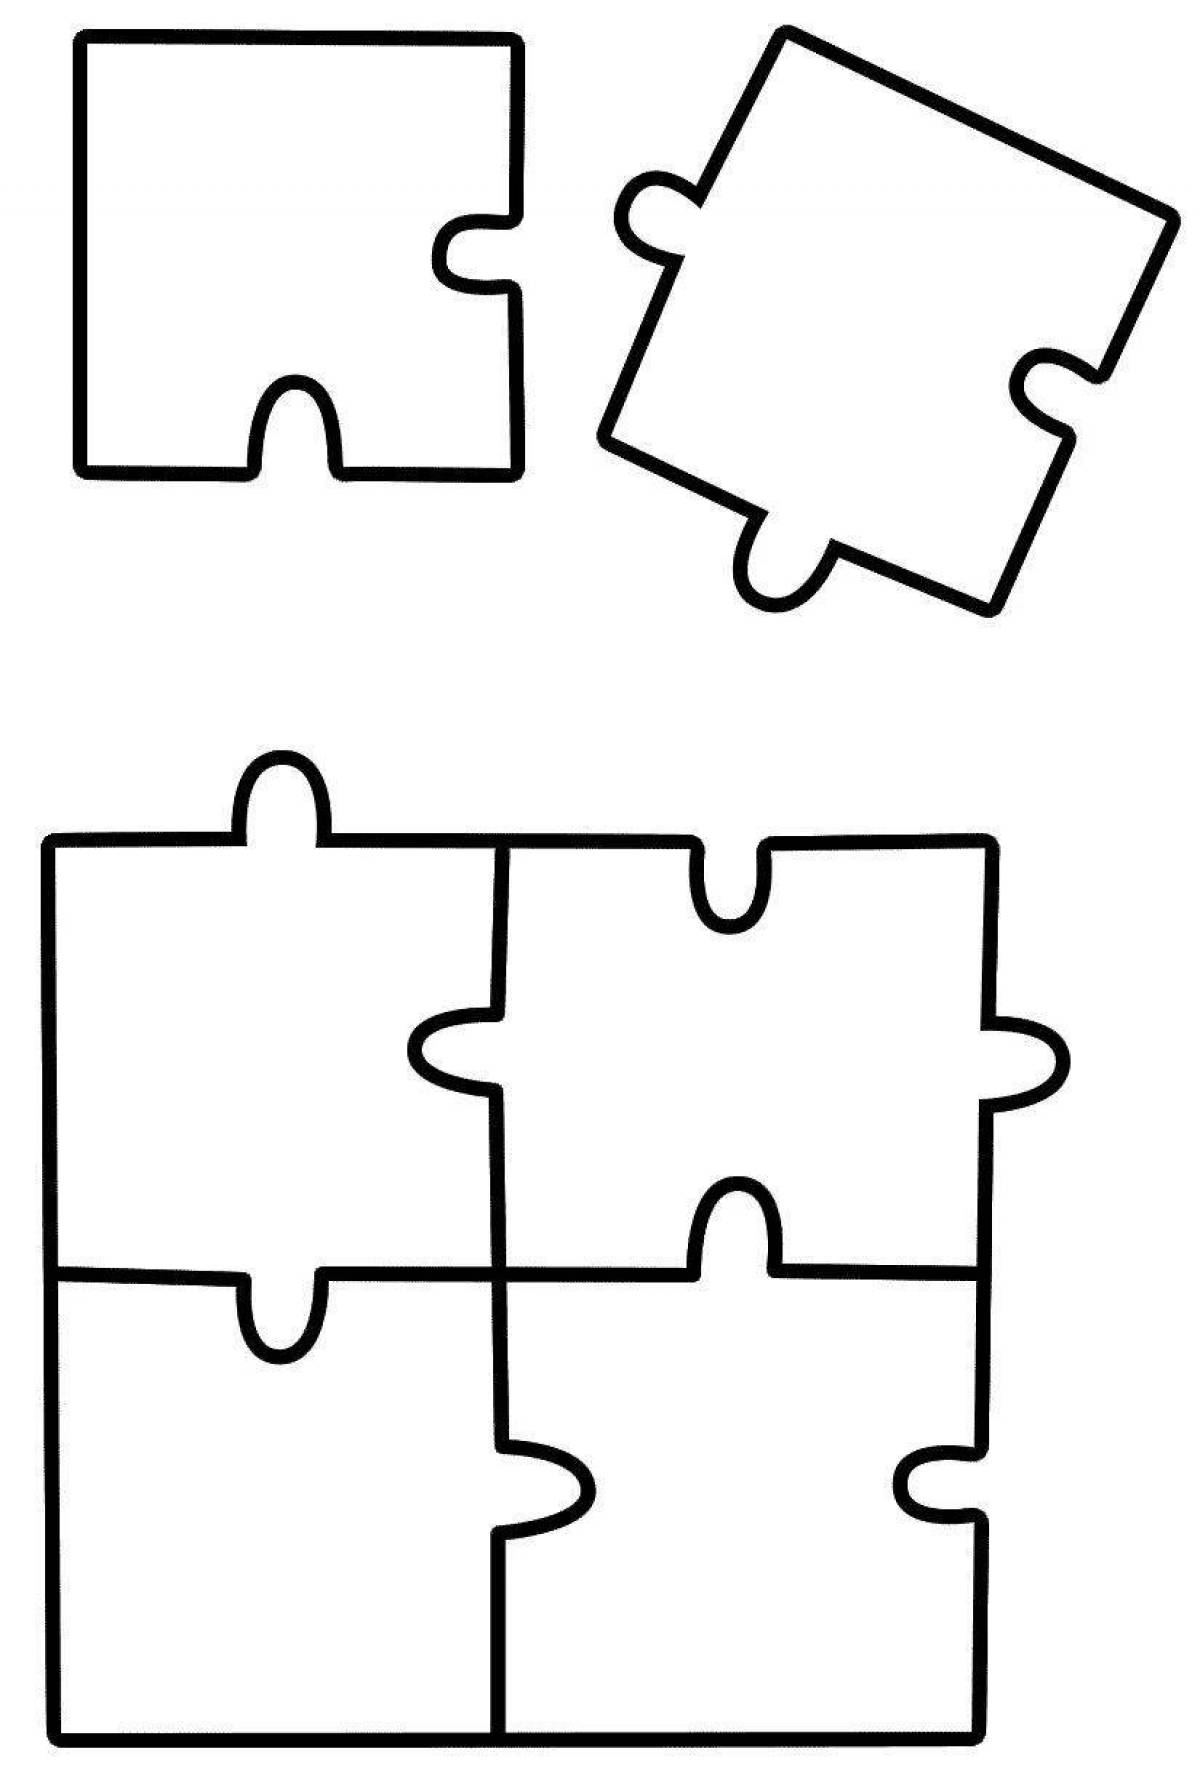 Fun coloring puzzle